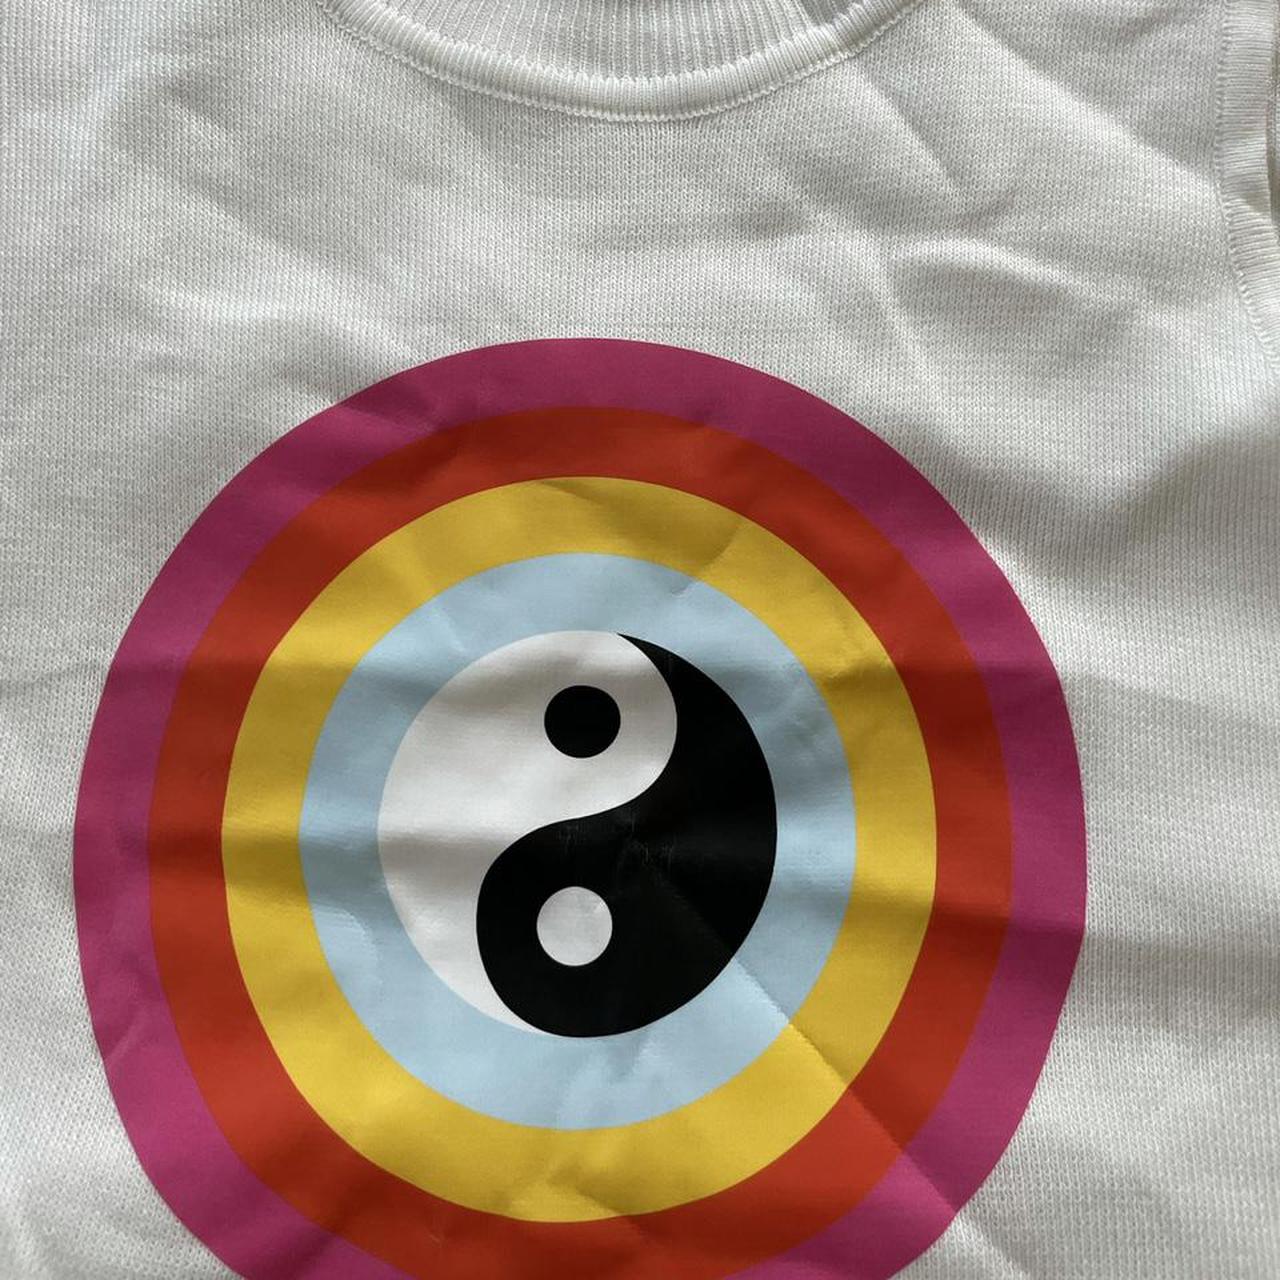 Product Image 2 - Yin and yang ☯️ colorful